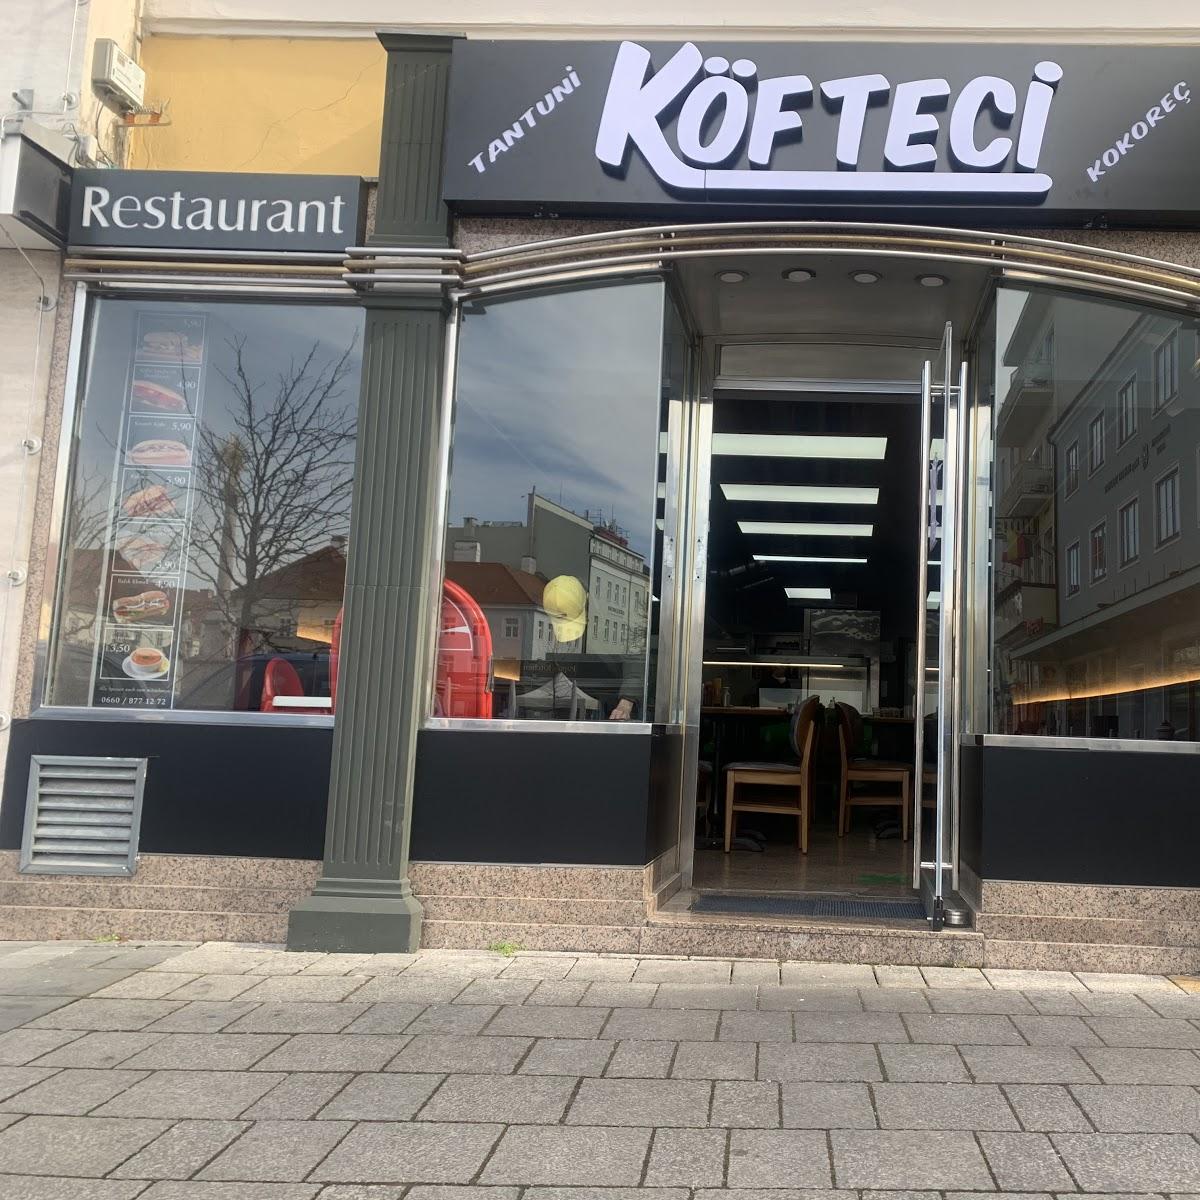 Restaurant "Köfteci" in Wiener Neustadt